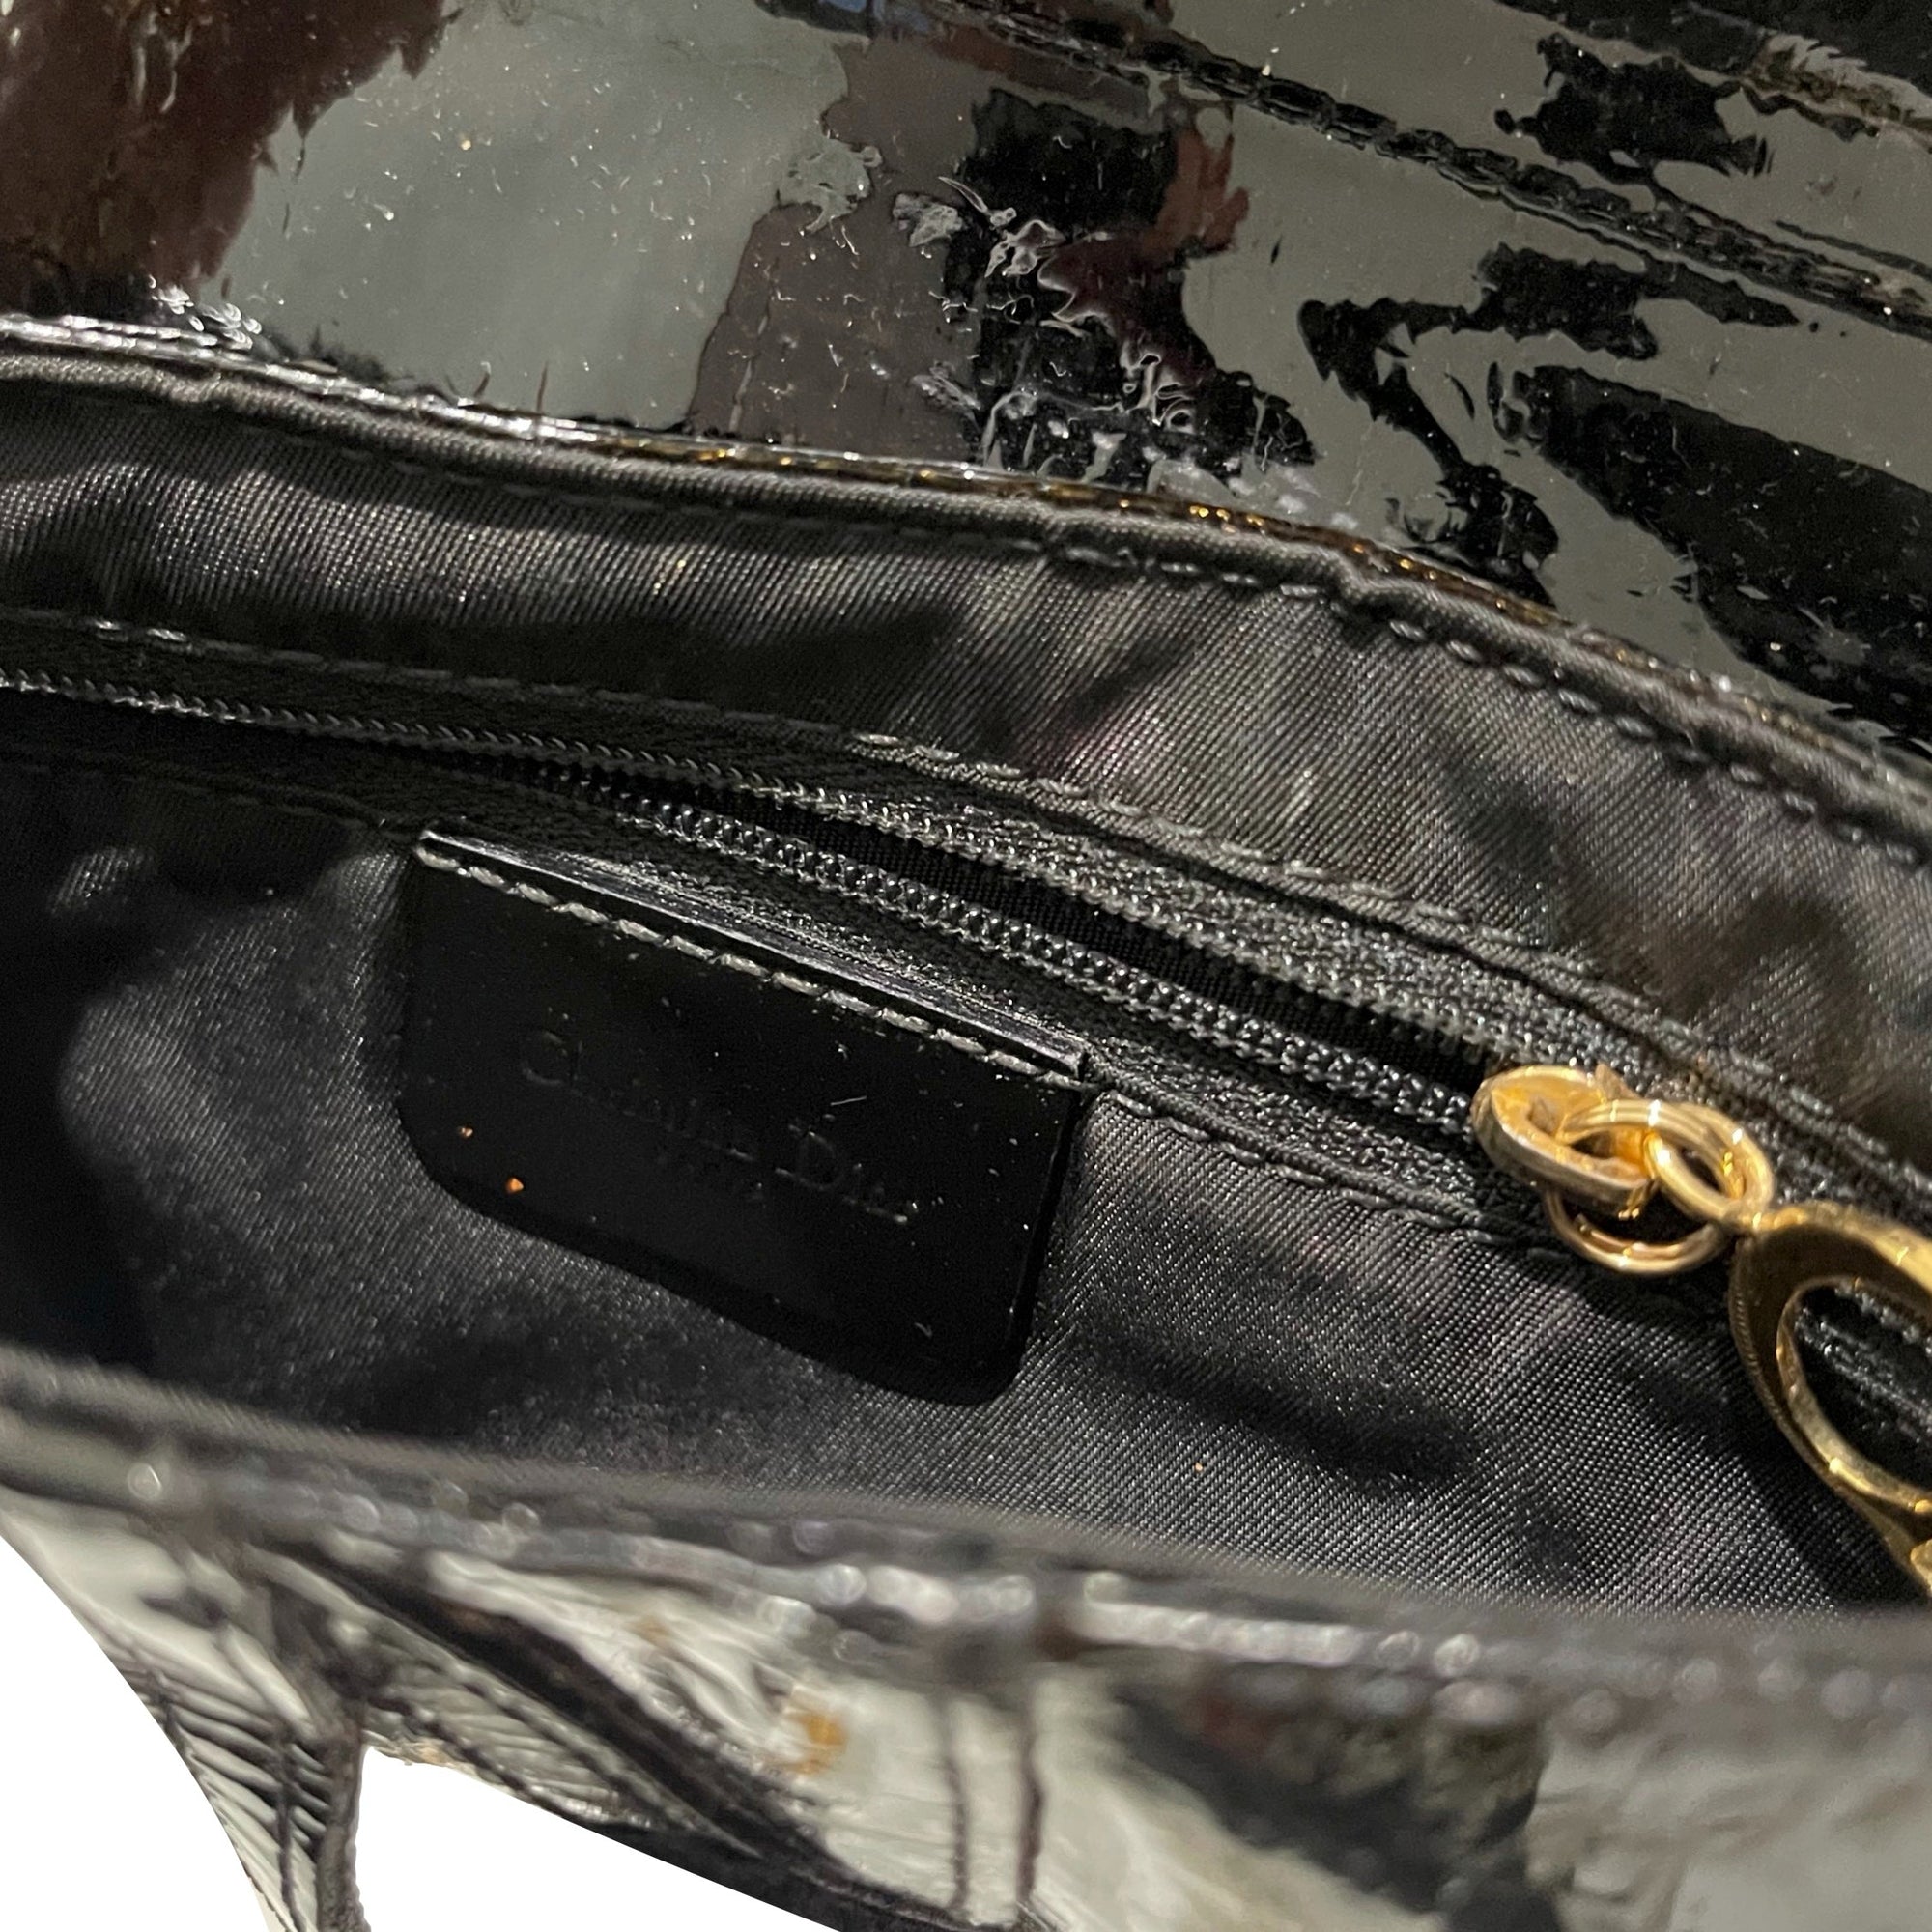 Dior Black Monogram Mini Saddle Bag - Handbags